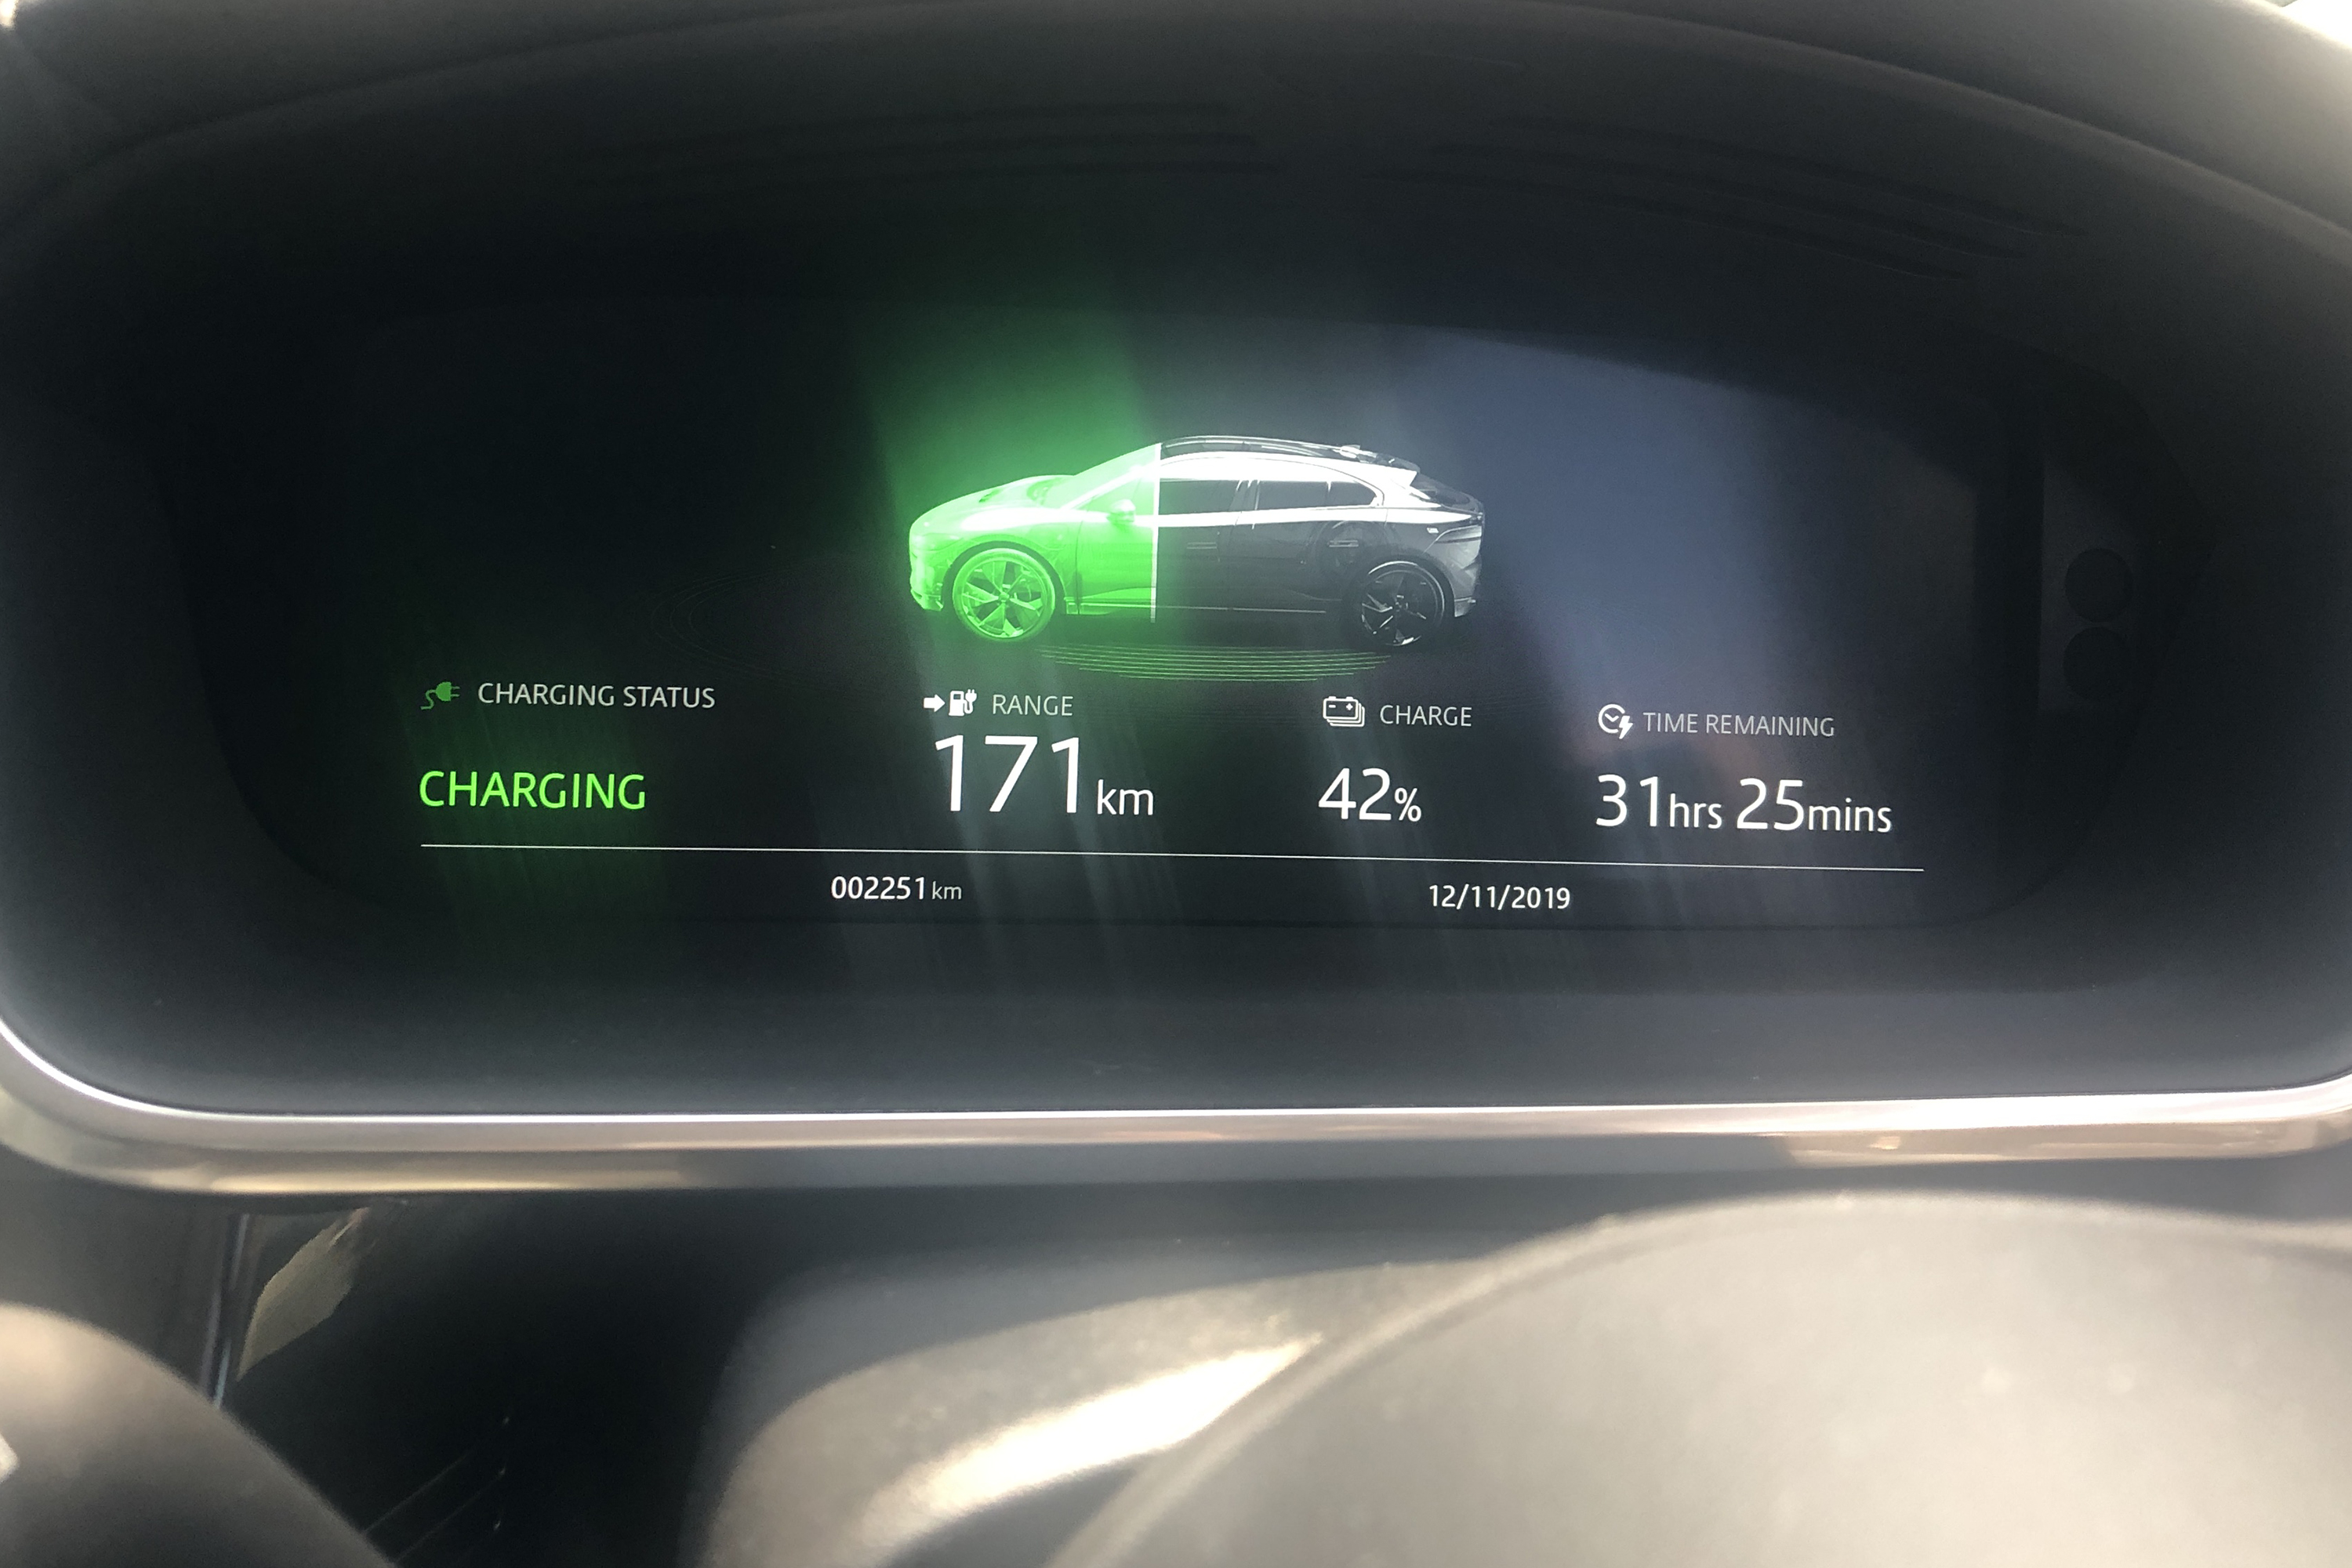 Jaguar i-Pace 31 hrs for charging